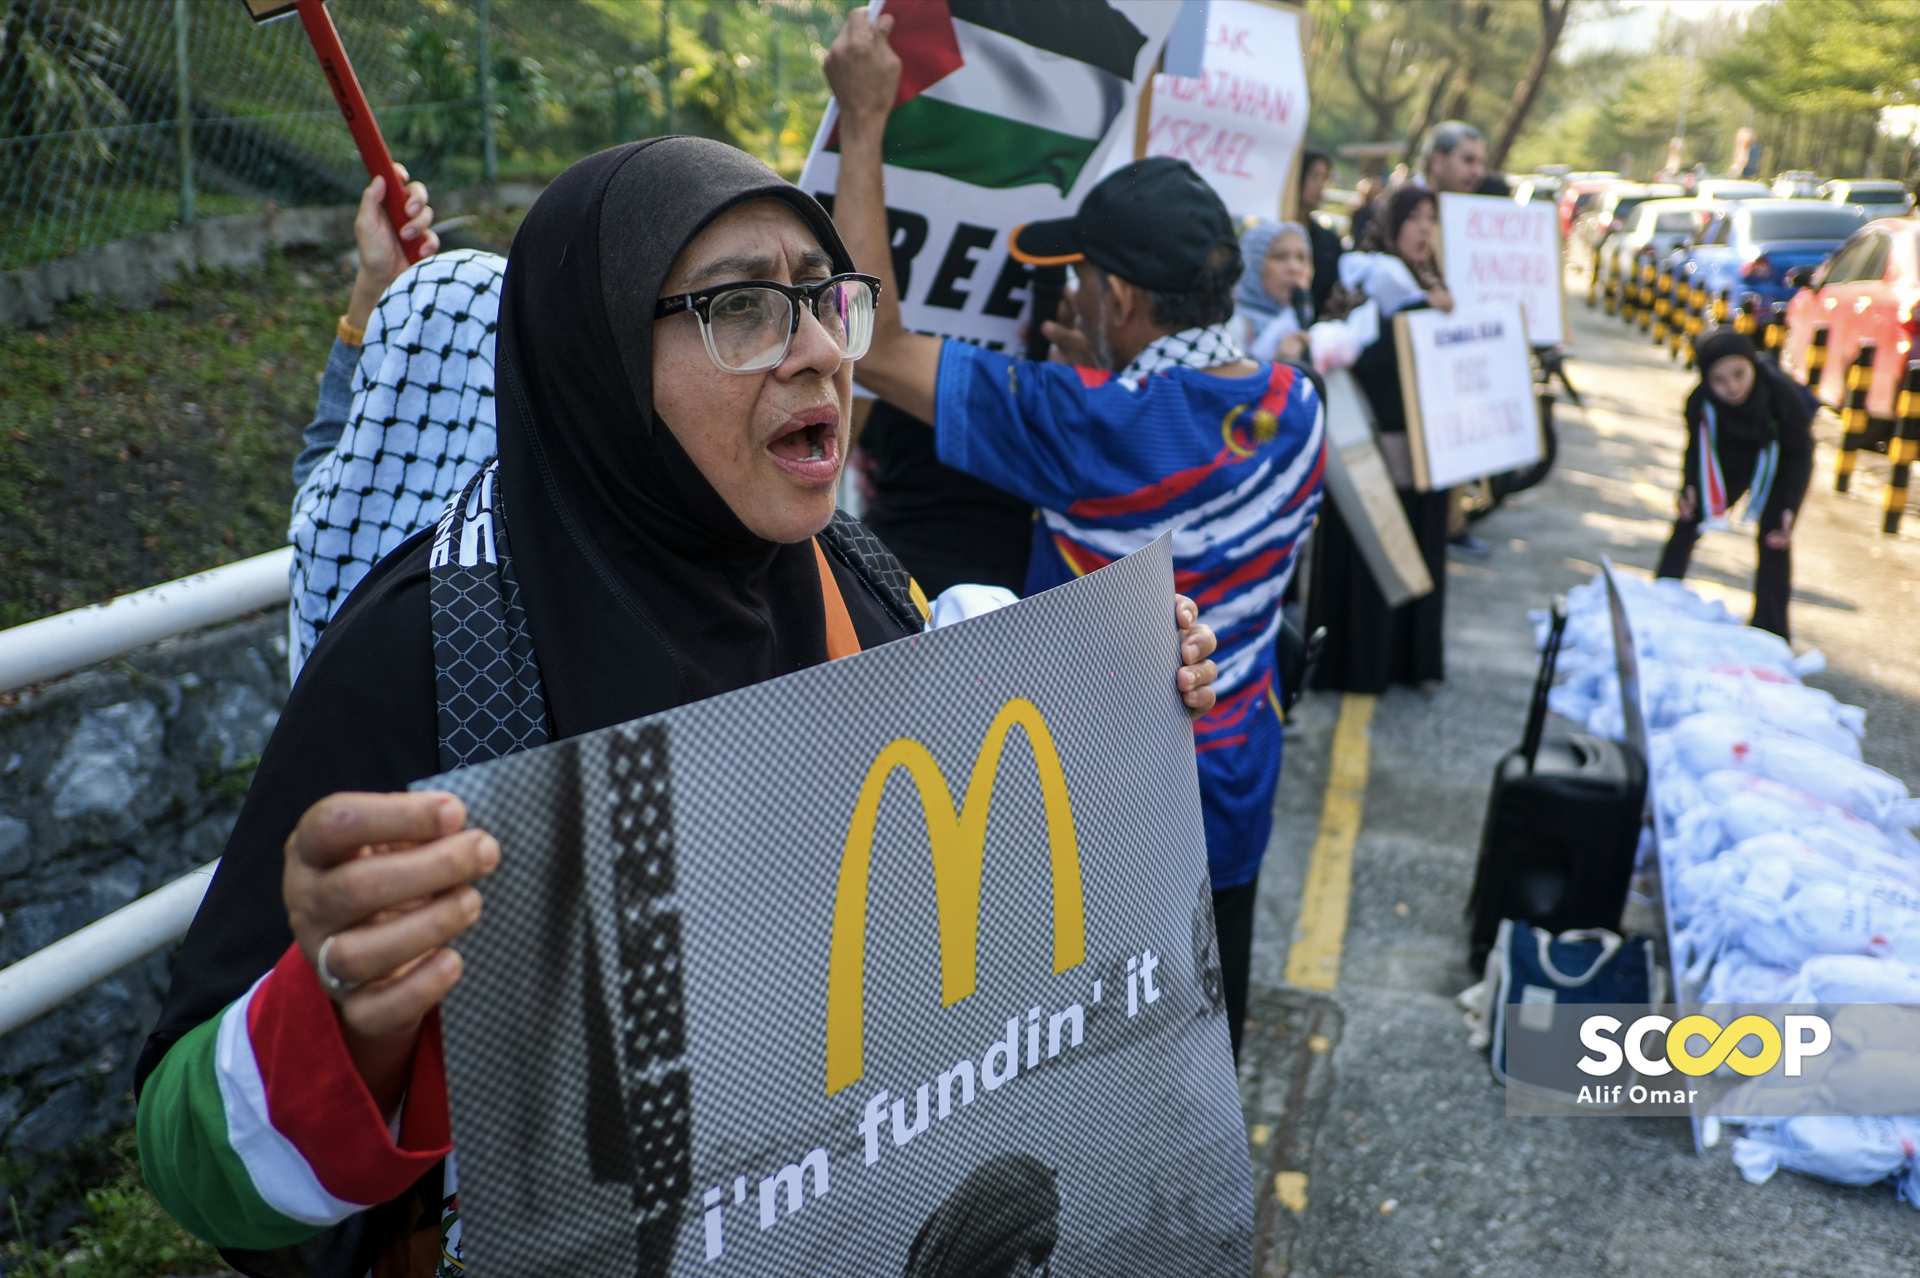 Kes saman McDonald’s Malaysia, BDS Malaysia masih belum selesai